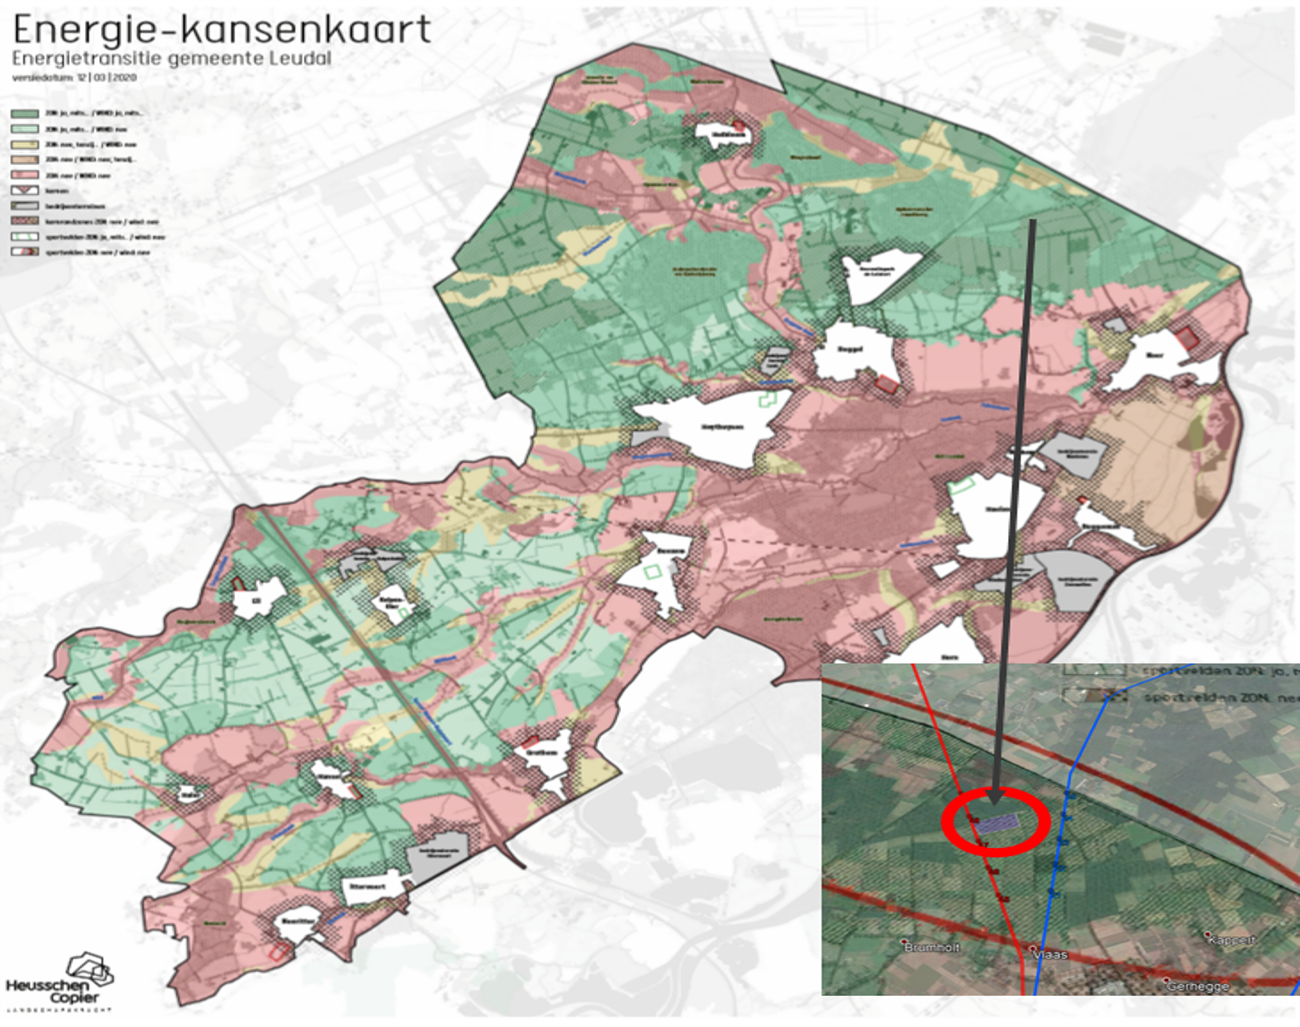 Kaart van gemeente Leudal met zoekgebieden